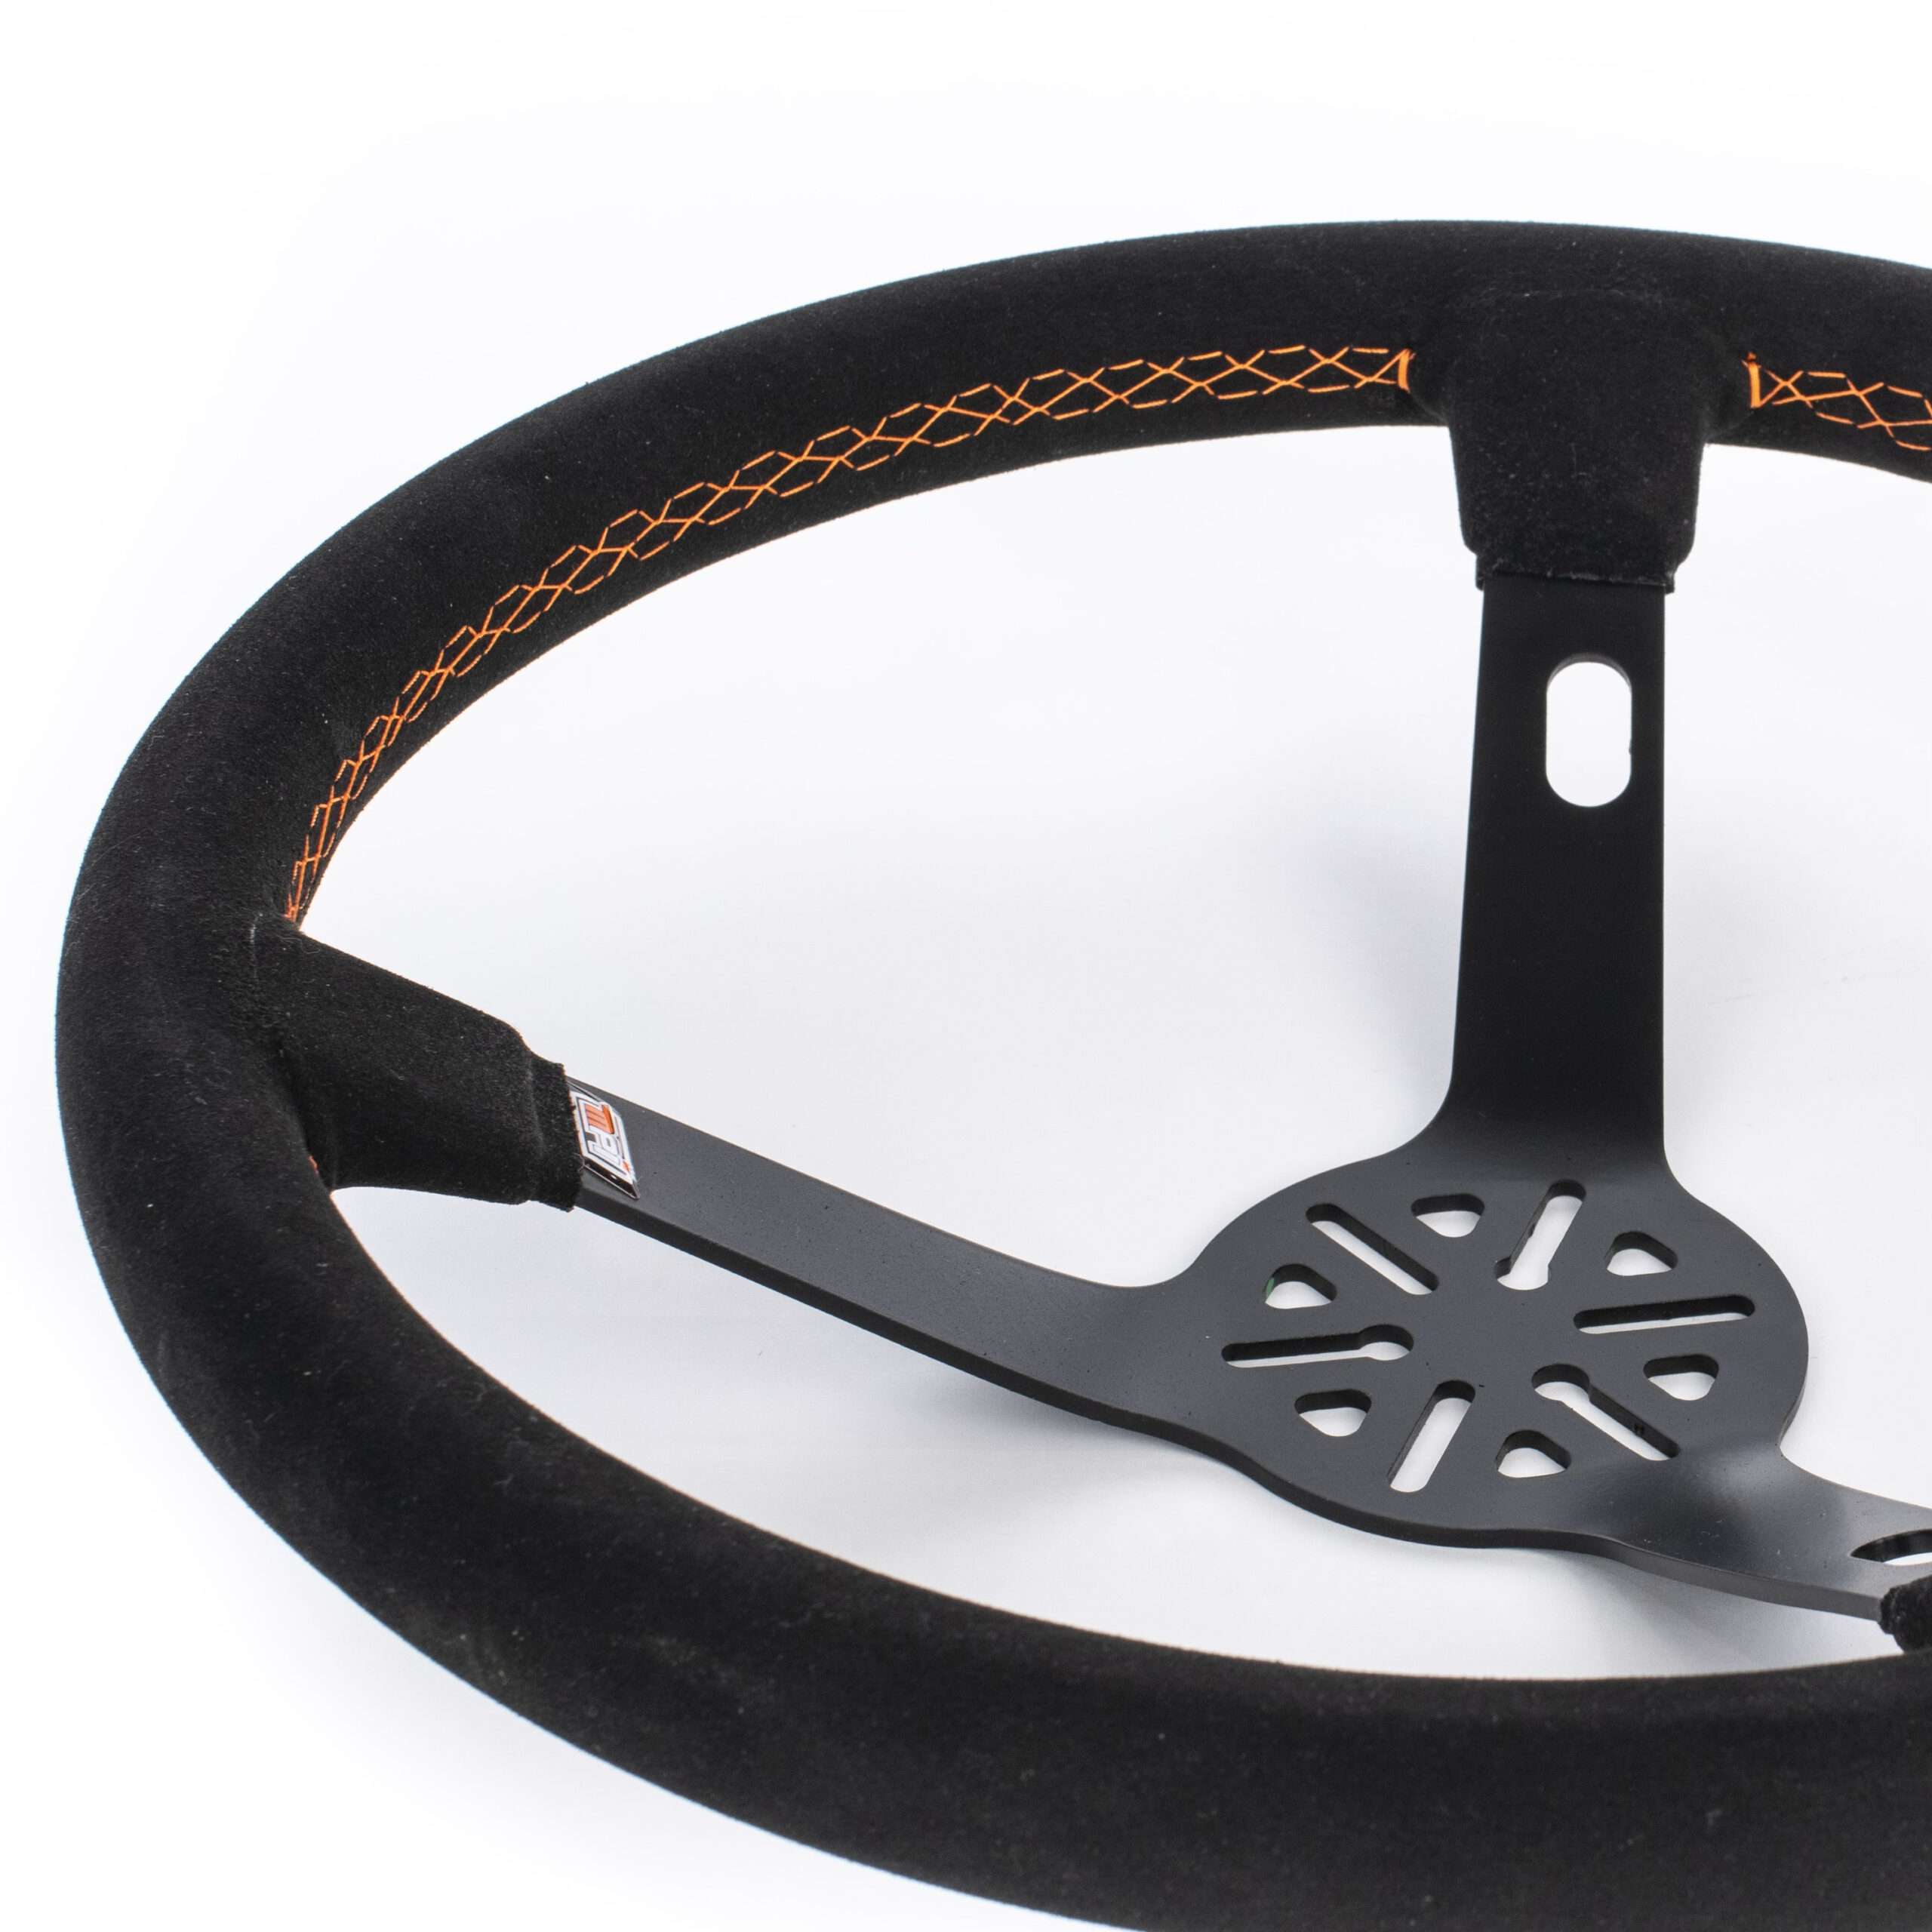 15 inch sim racing stock car style wheel